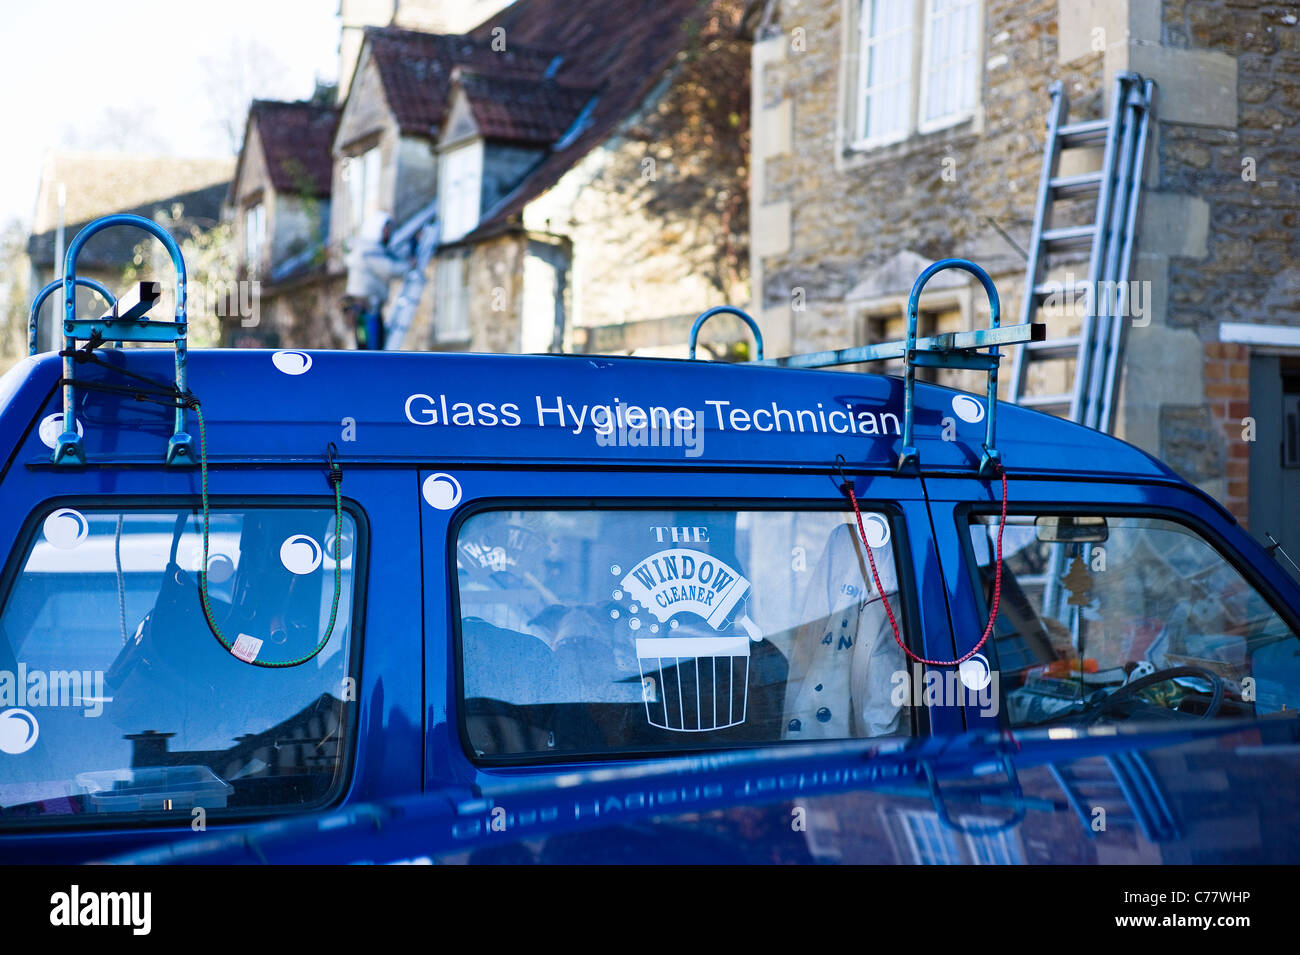 Blue van belonging to 'Glass Hygiene Technician' or Window Cleaner at work in village Stock Photo